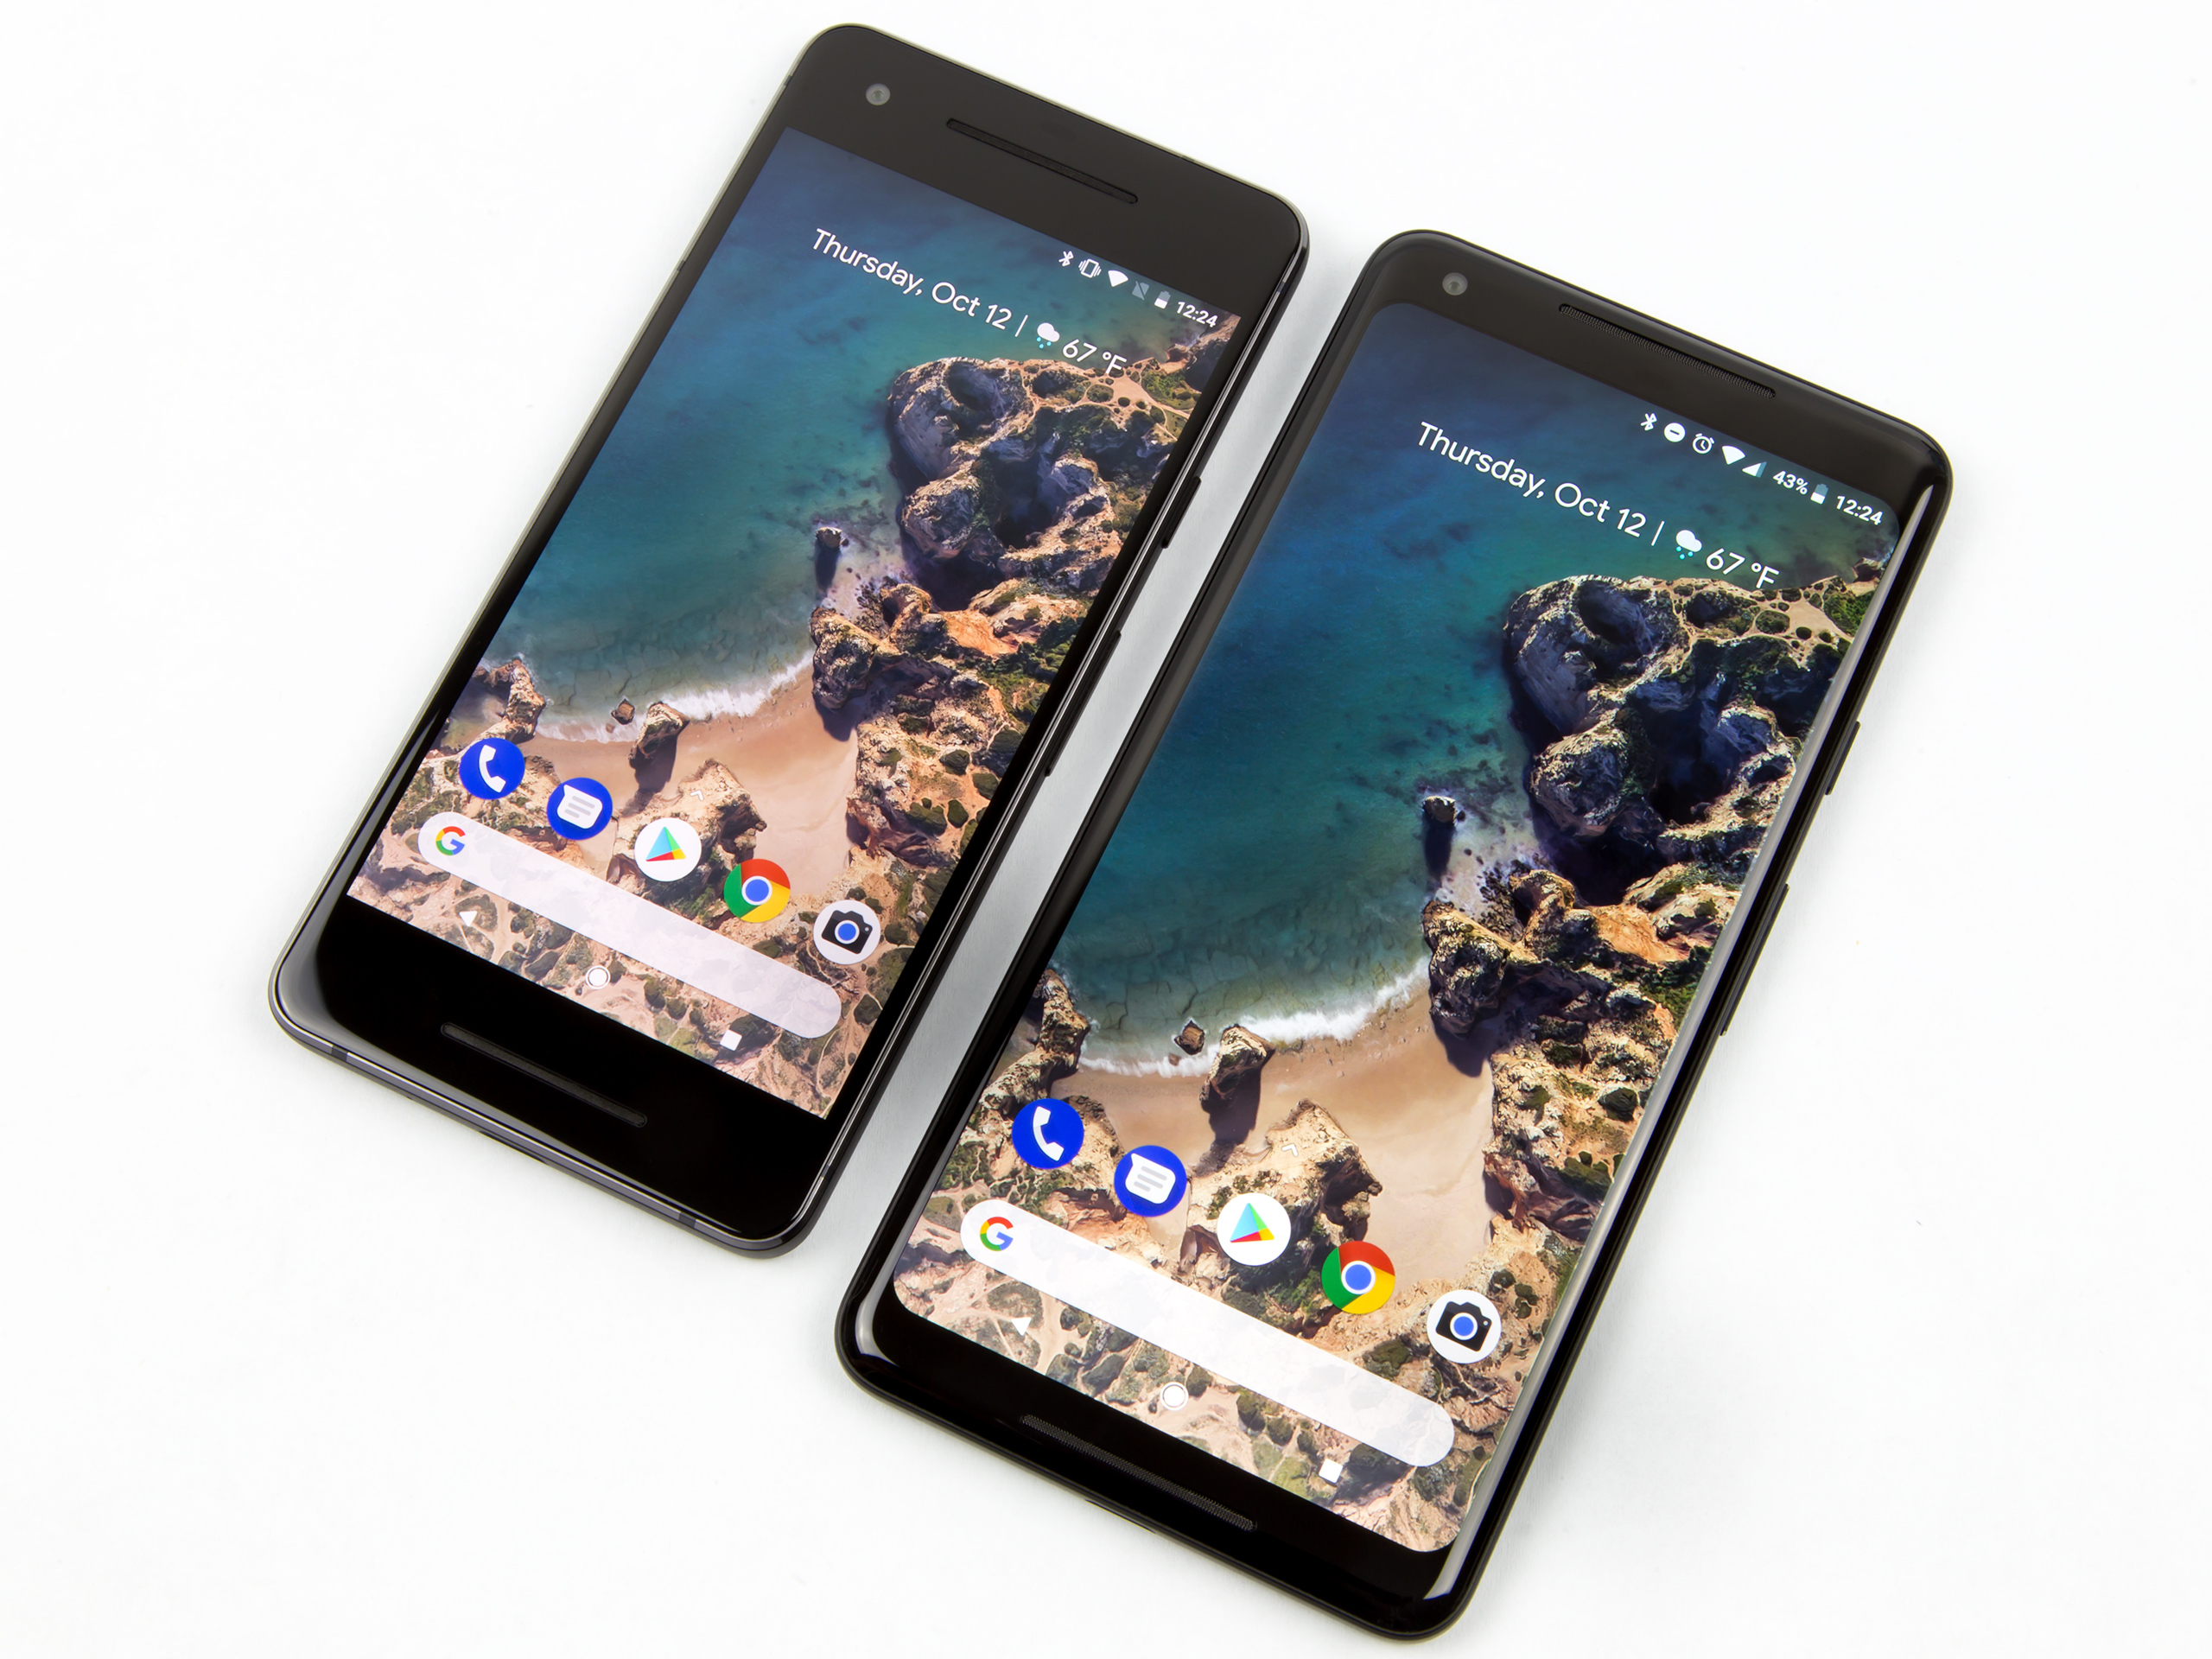 Google Pixel 2 review (updated): Pixel 2 still great, but a Pixel